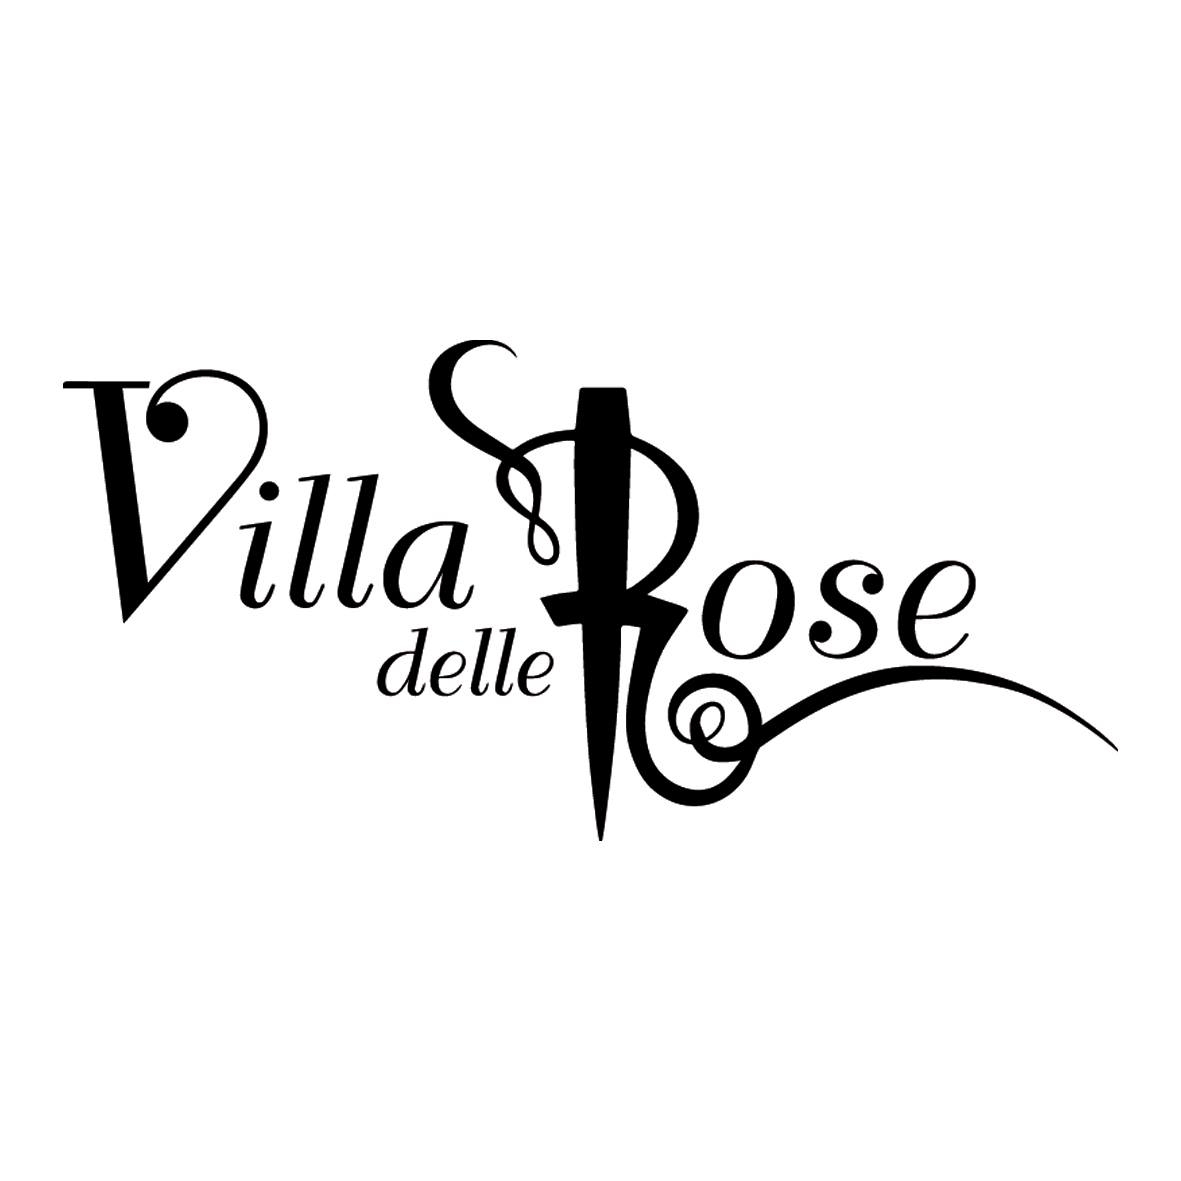 villa delle rose logo